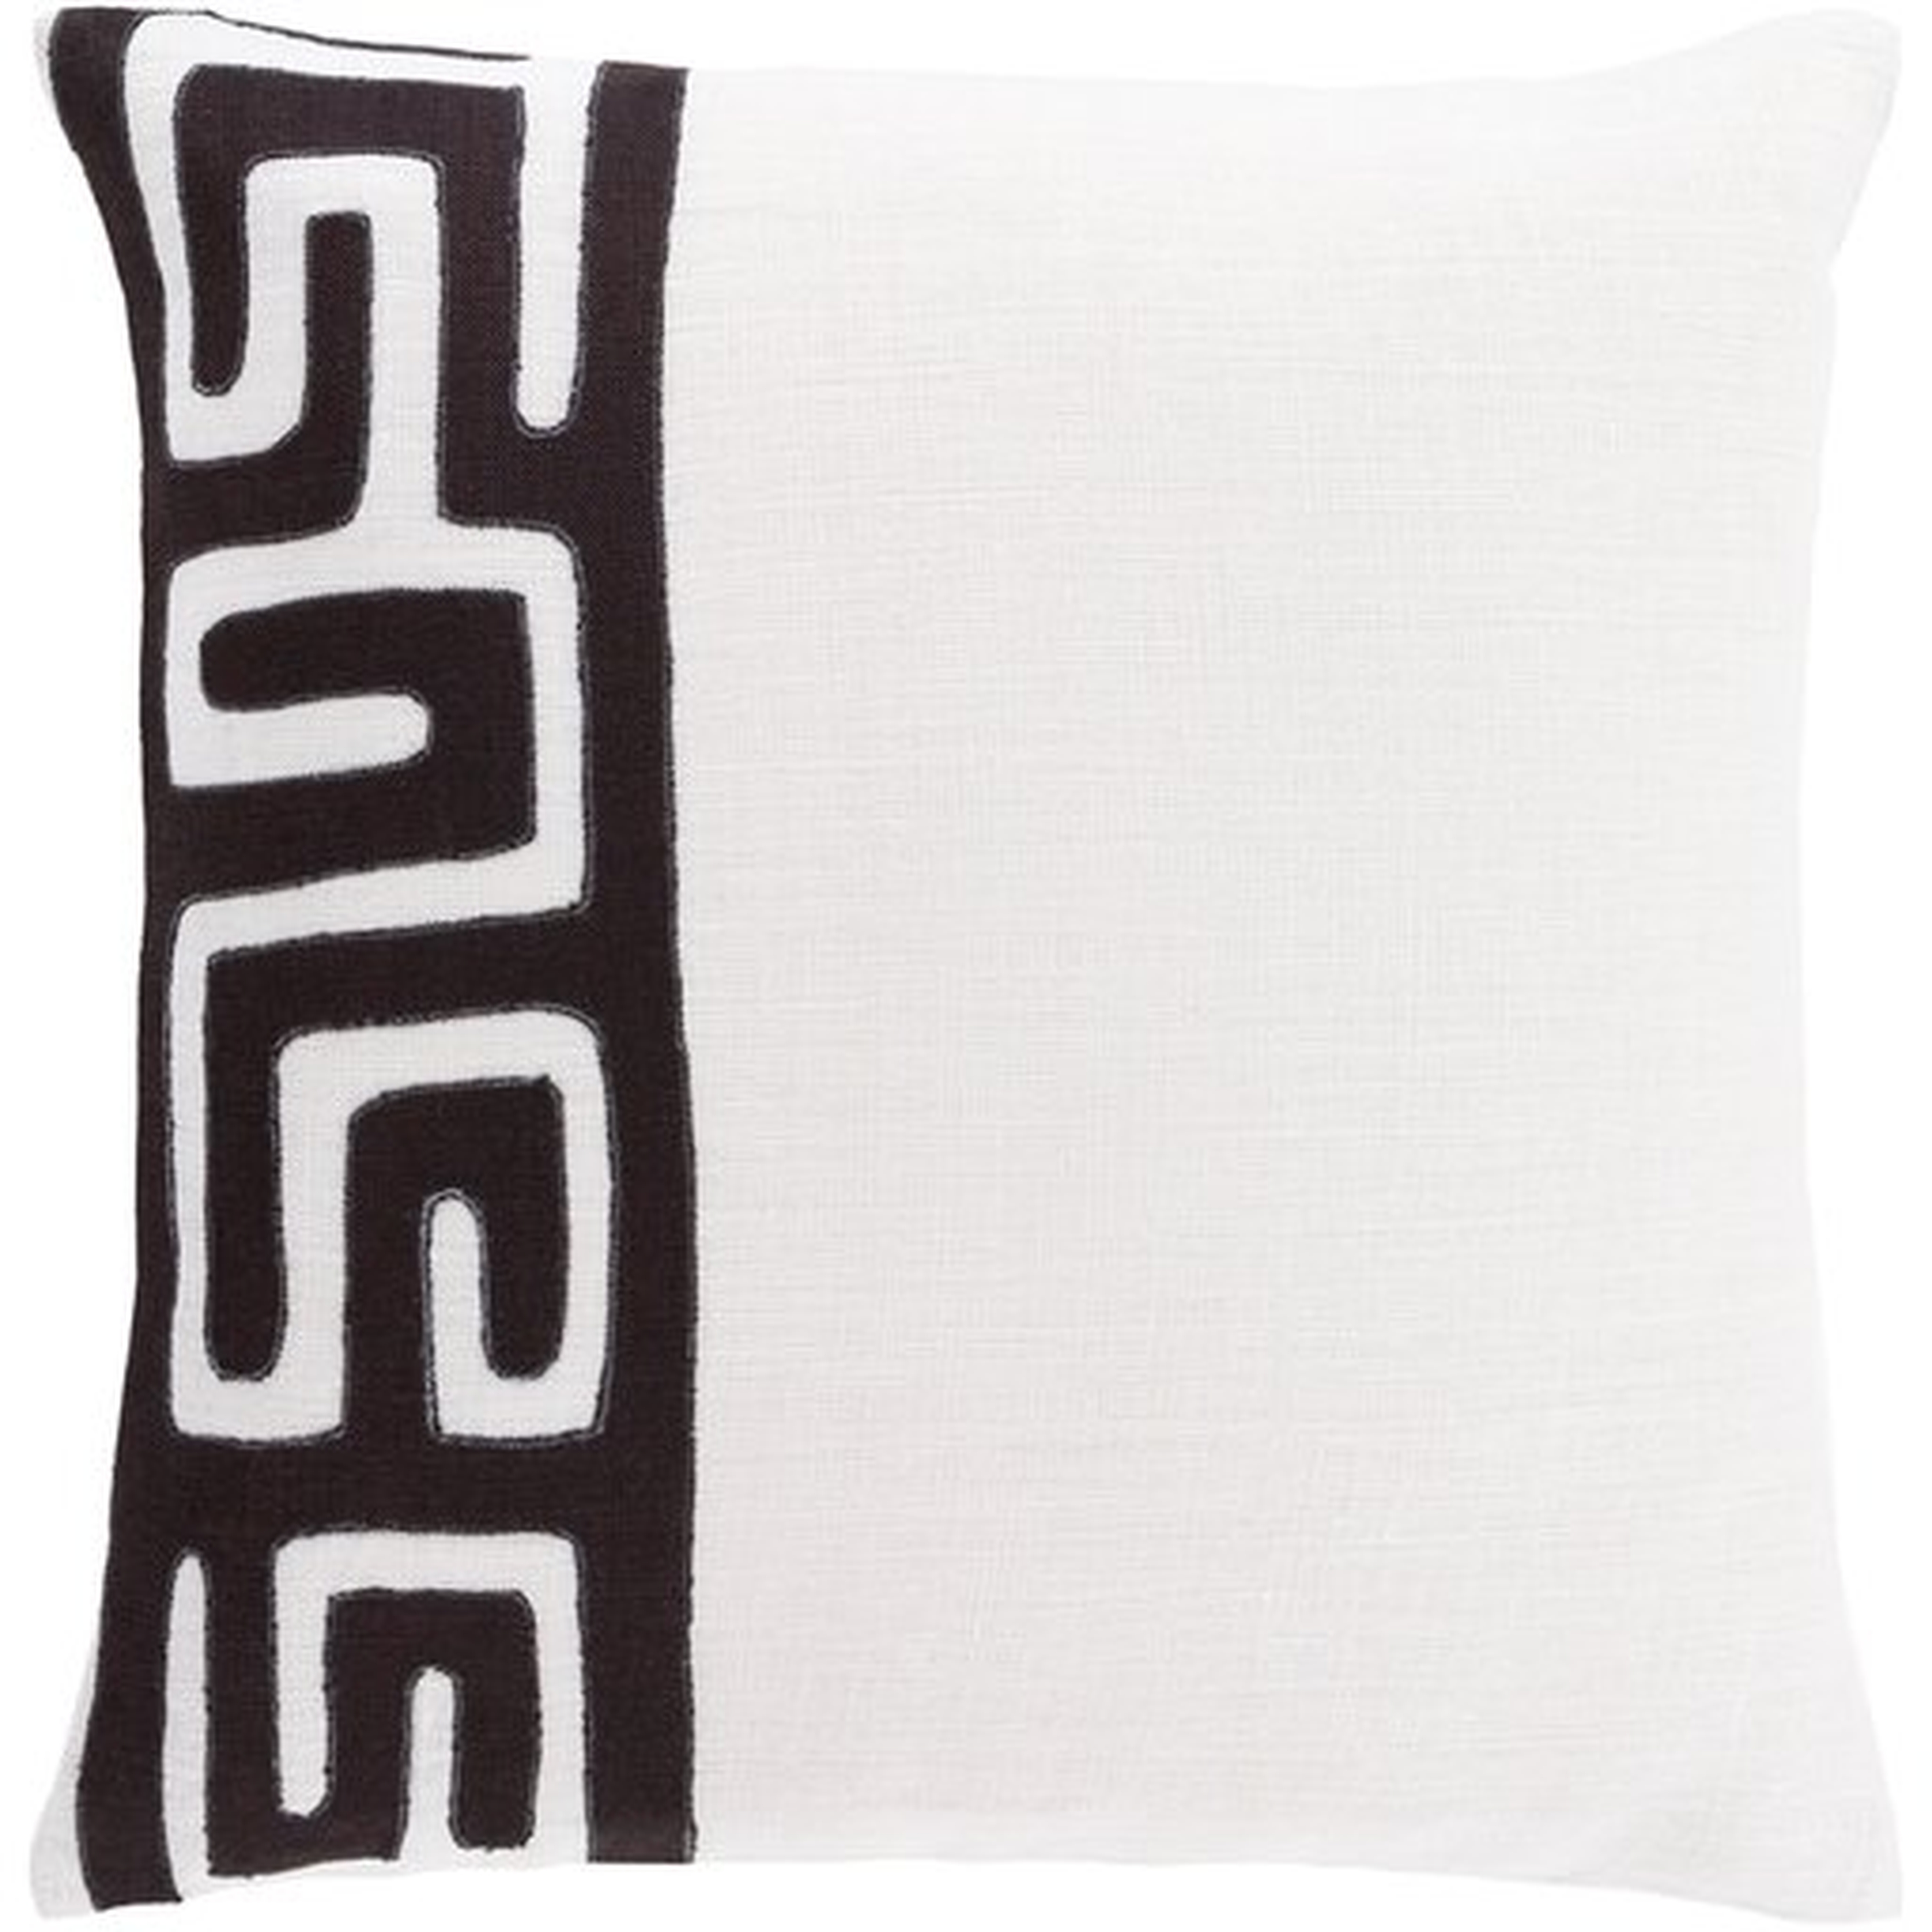 Nairobi Throw Pillow, 18" x 18", with poly insert - Surya